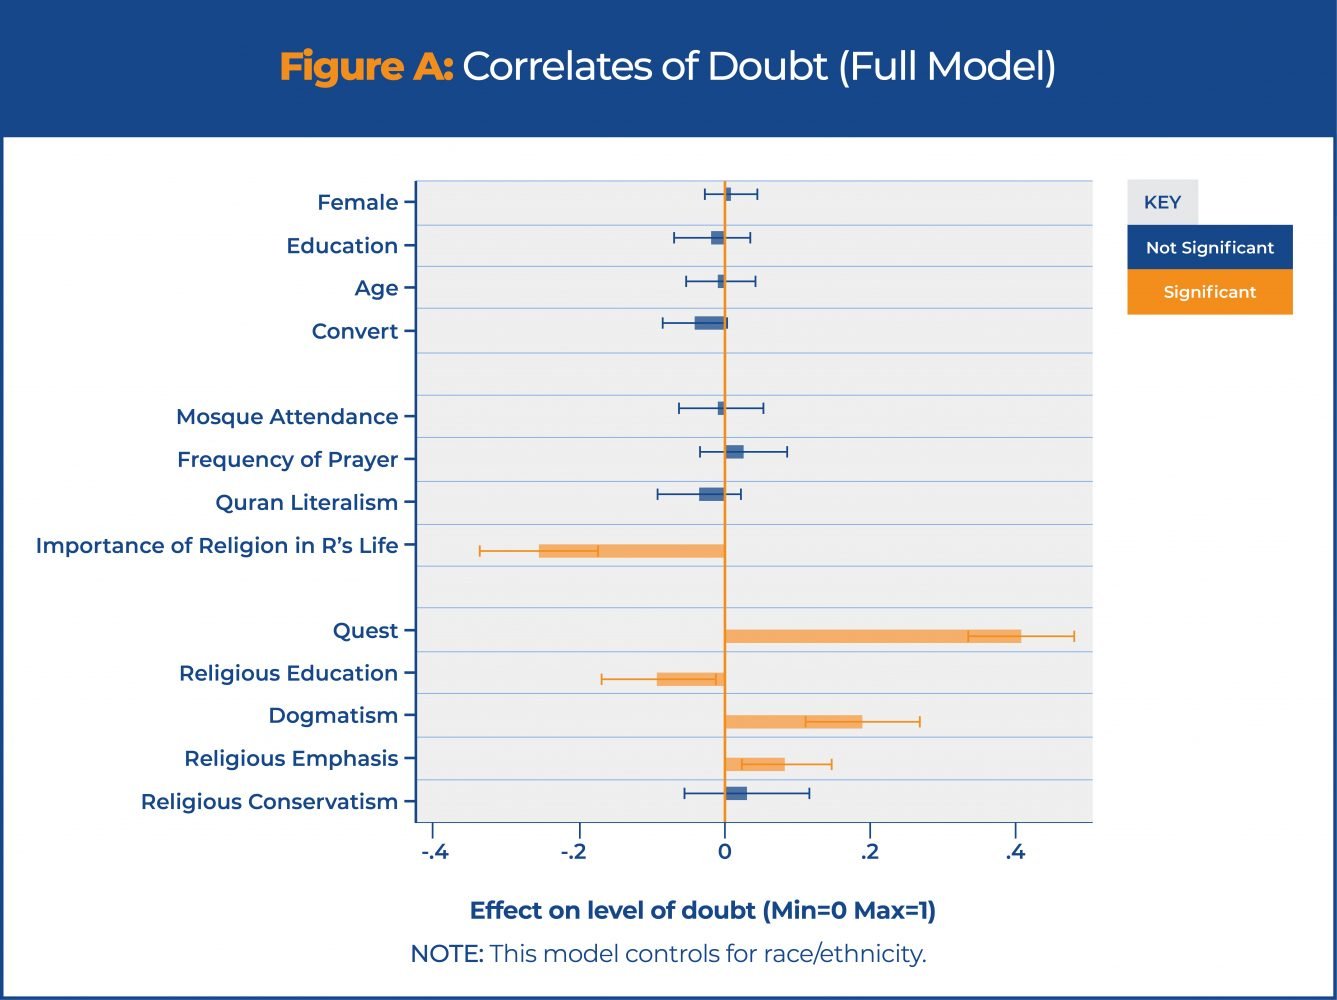 Figure A: Correlates of Doubt